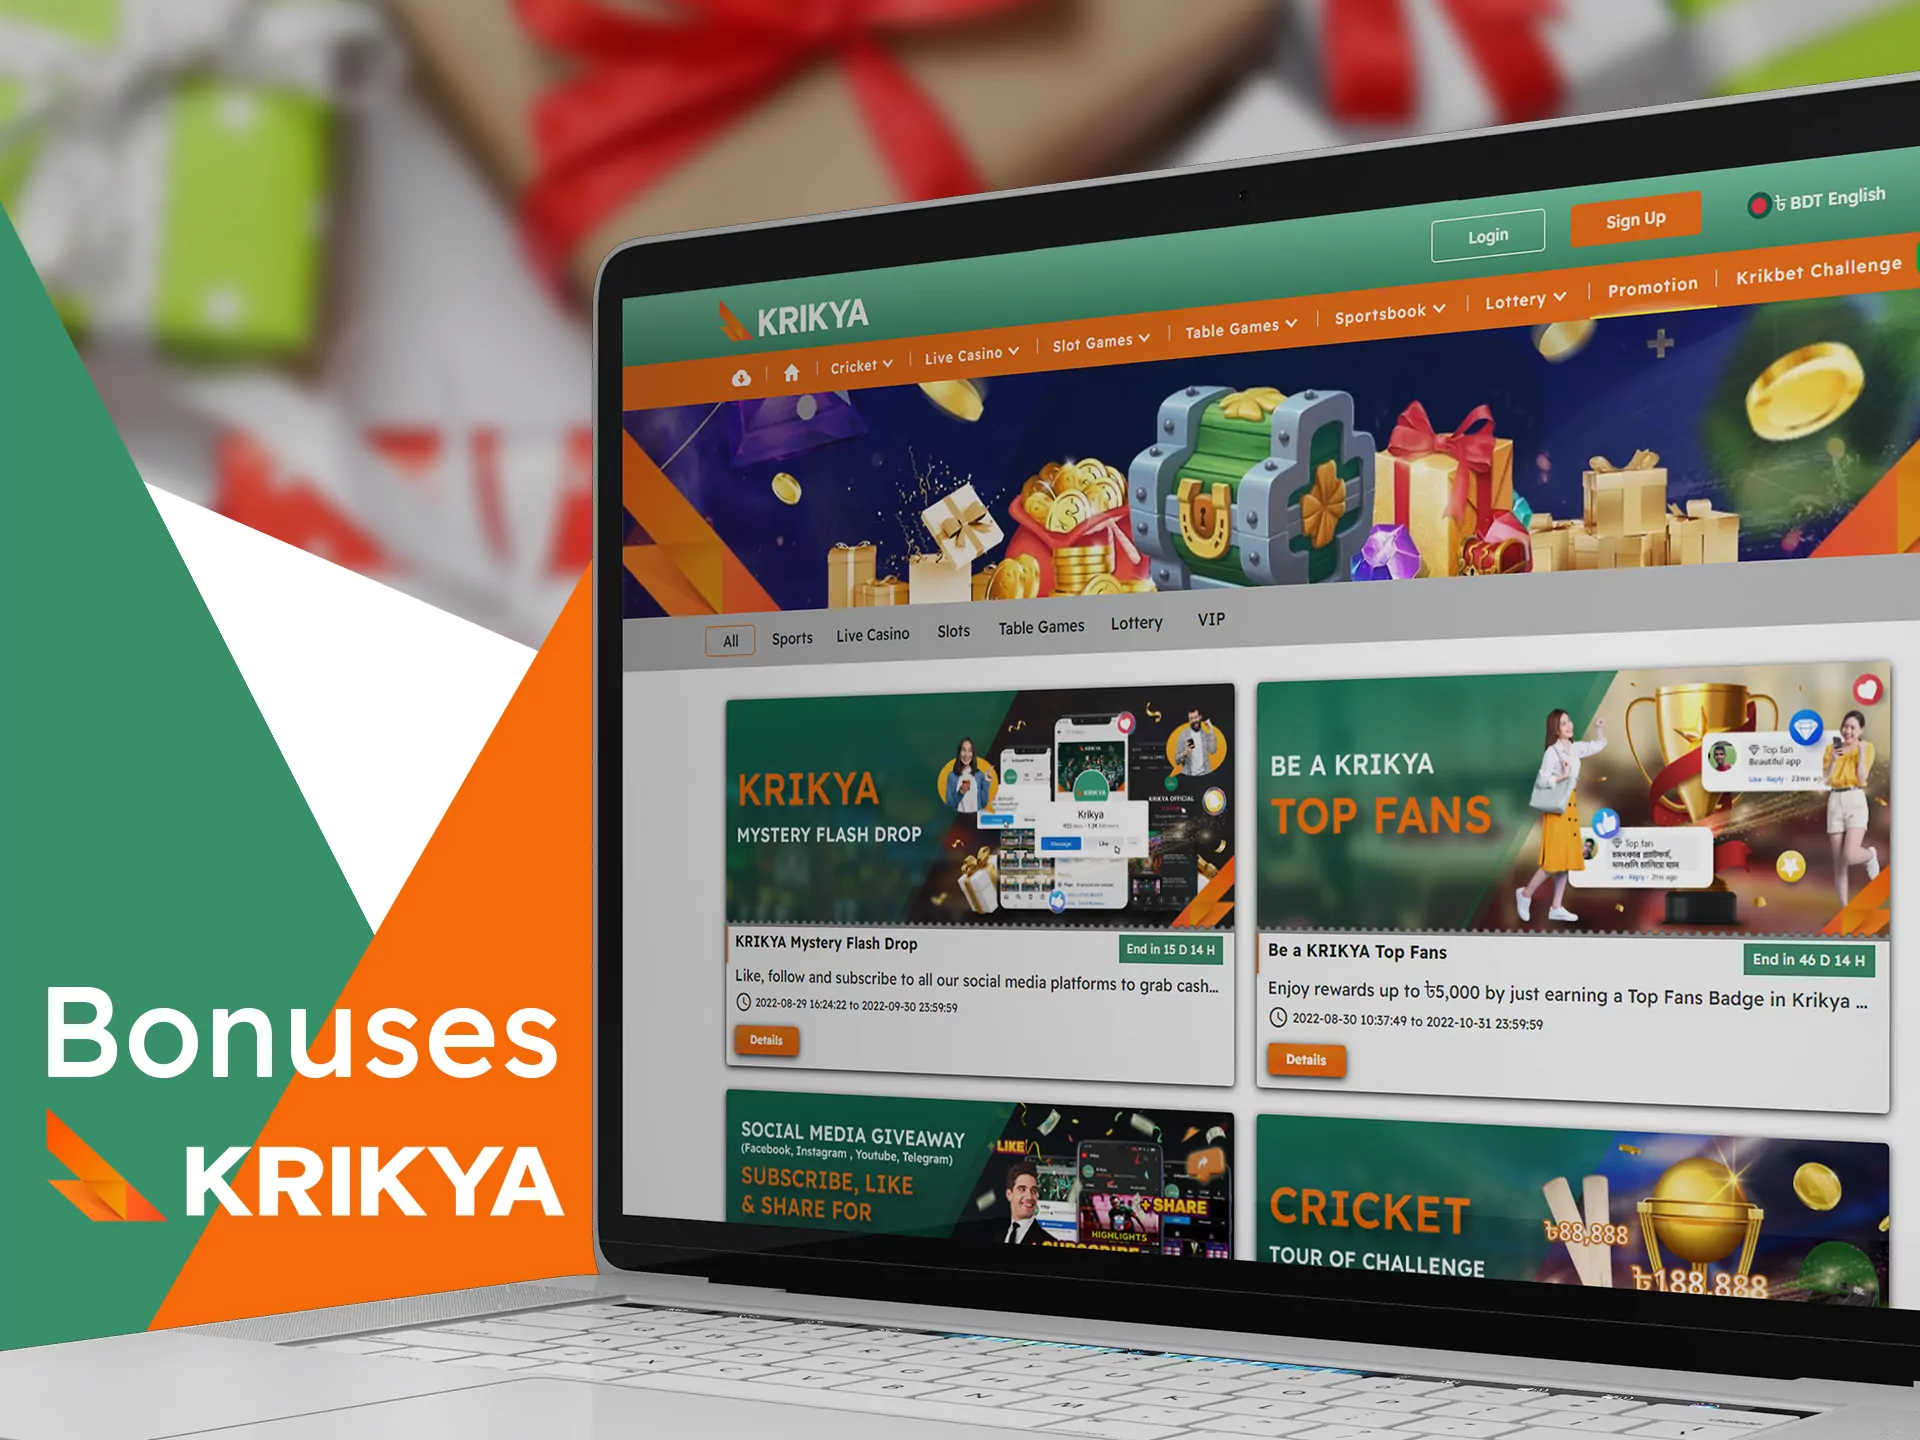 Don't forget to check for new Krikya bonuses at bonus page.